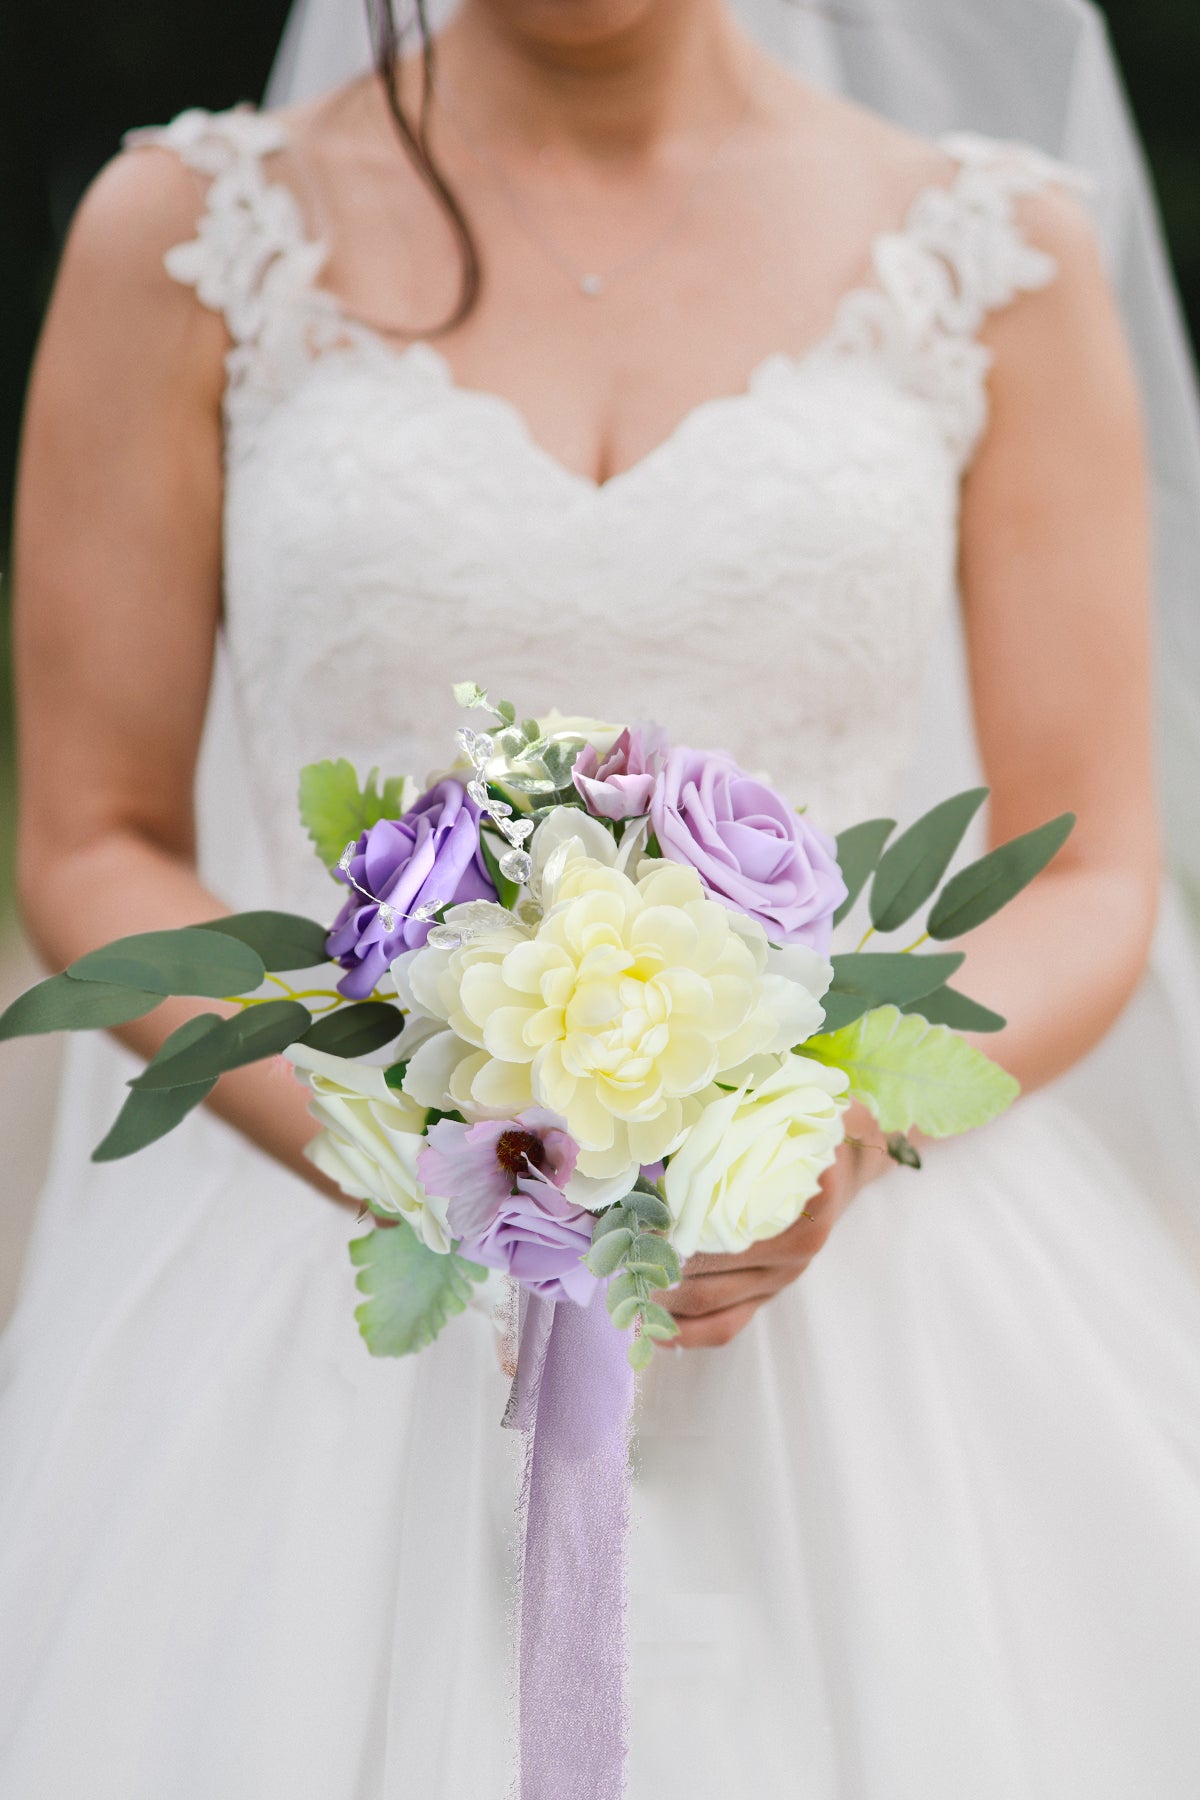 8''/10'' Bridesmaid Bouquets, Set of 4, Wedding Centerpieces - Lavender